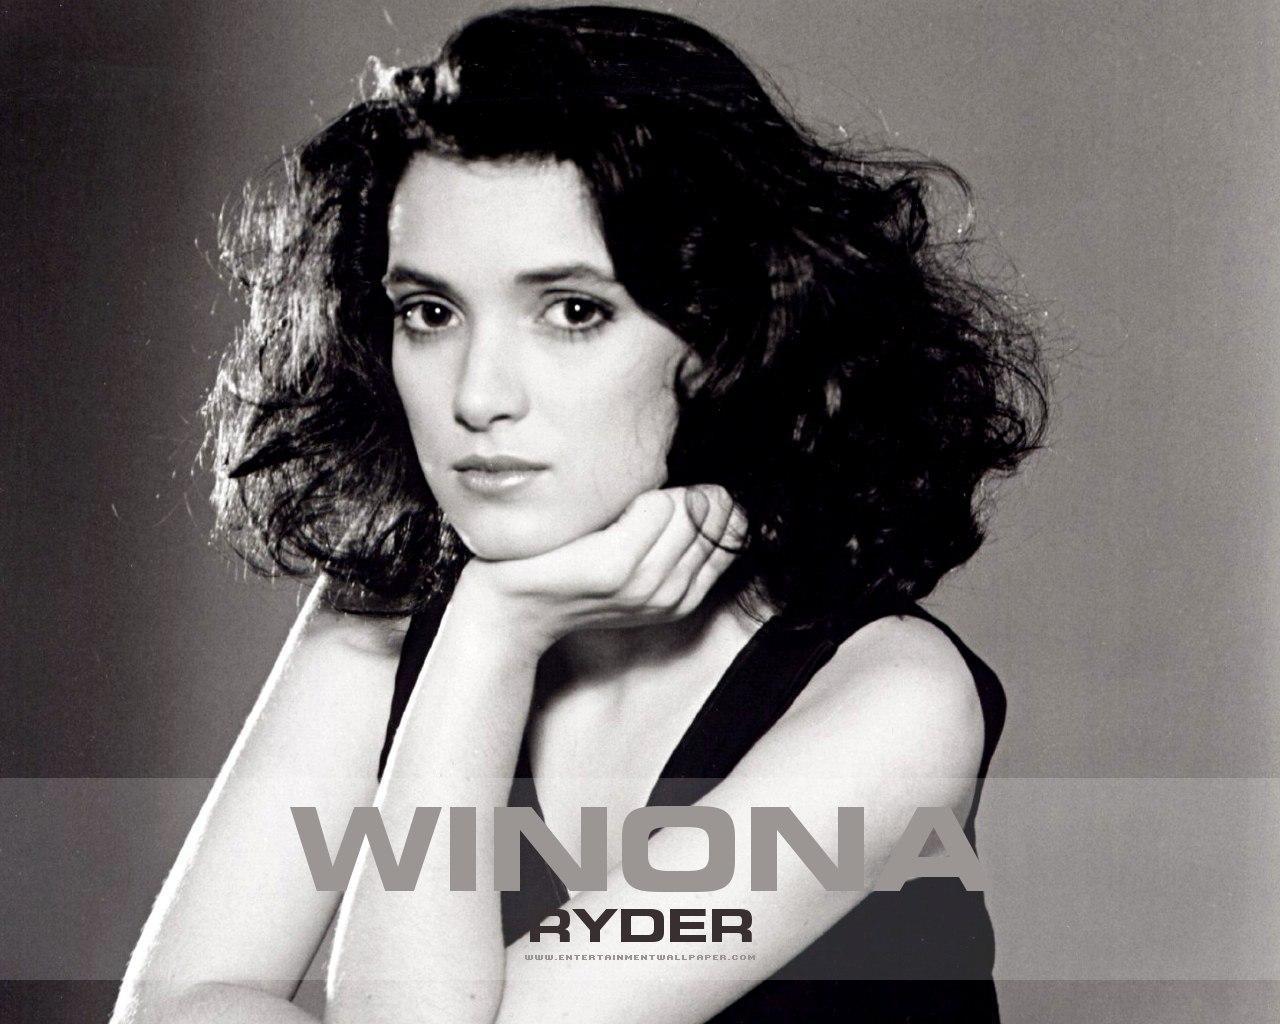 Winona Ryder Wallpaper 41058 1600x1200 px